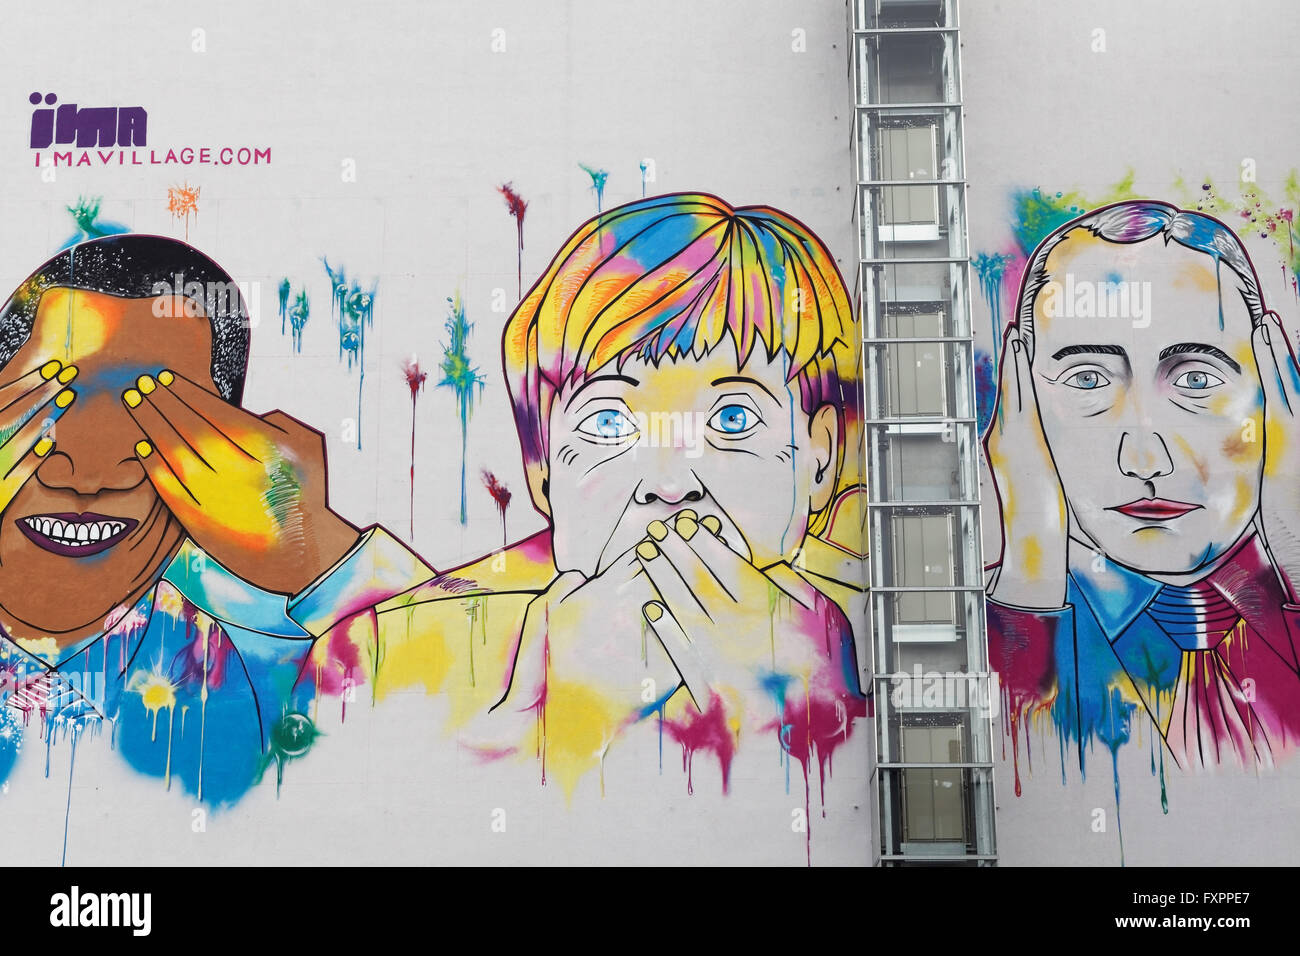 Obama-Merkel-Putin, Graffiti, Berlin, Germany Stock Photo